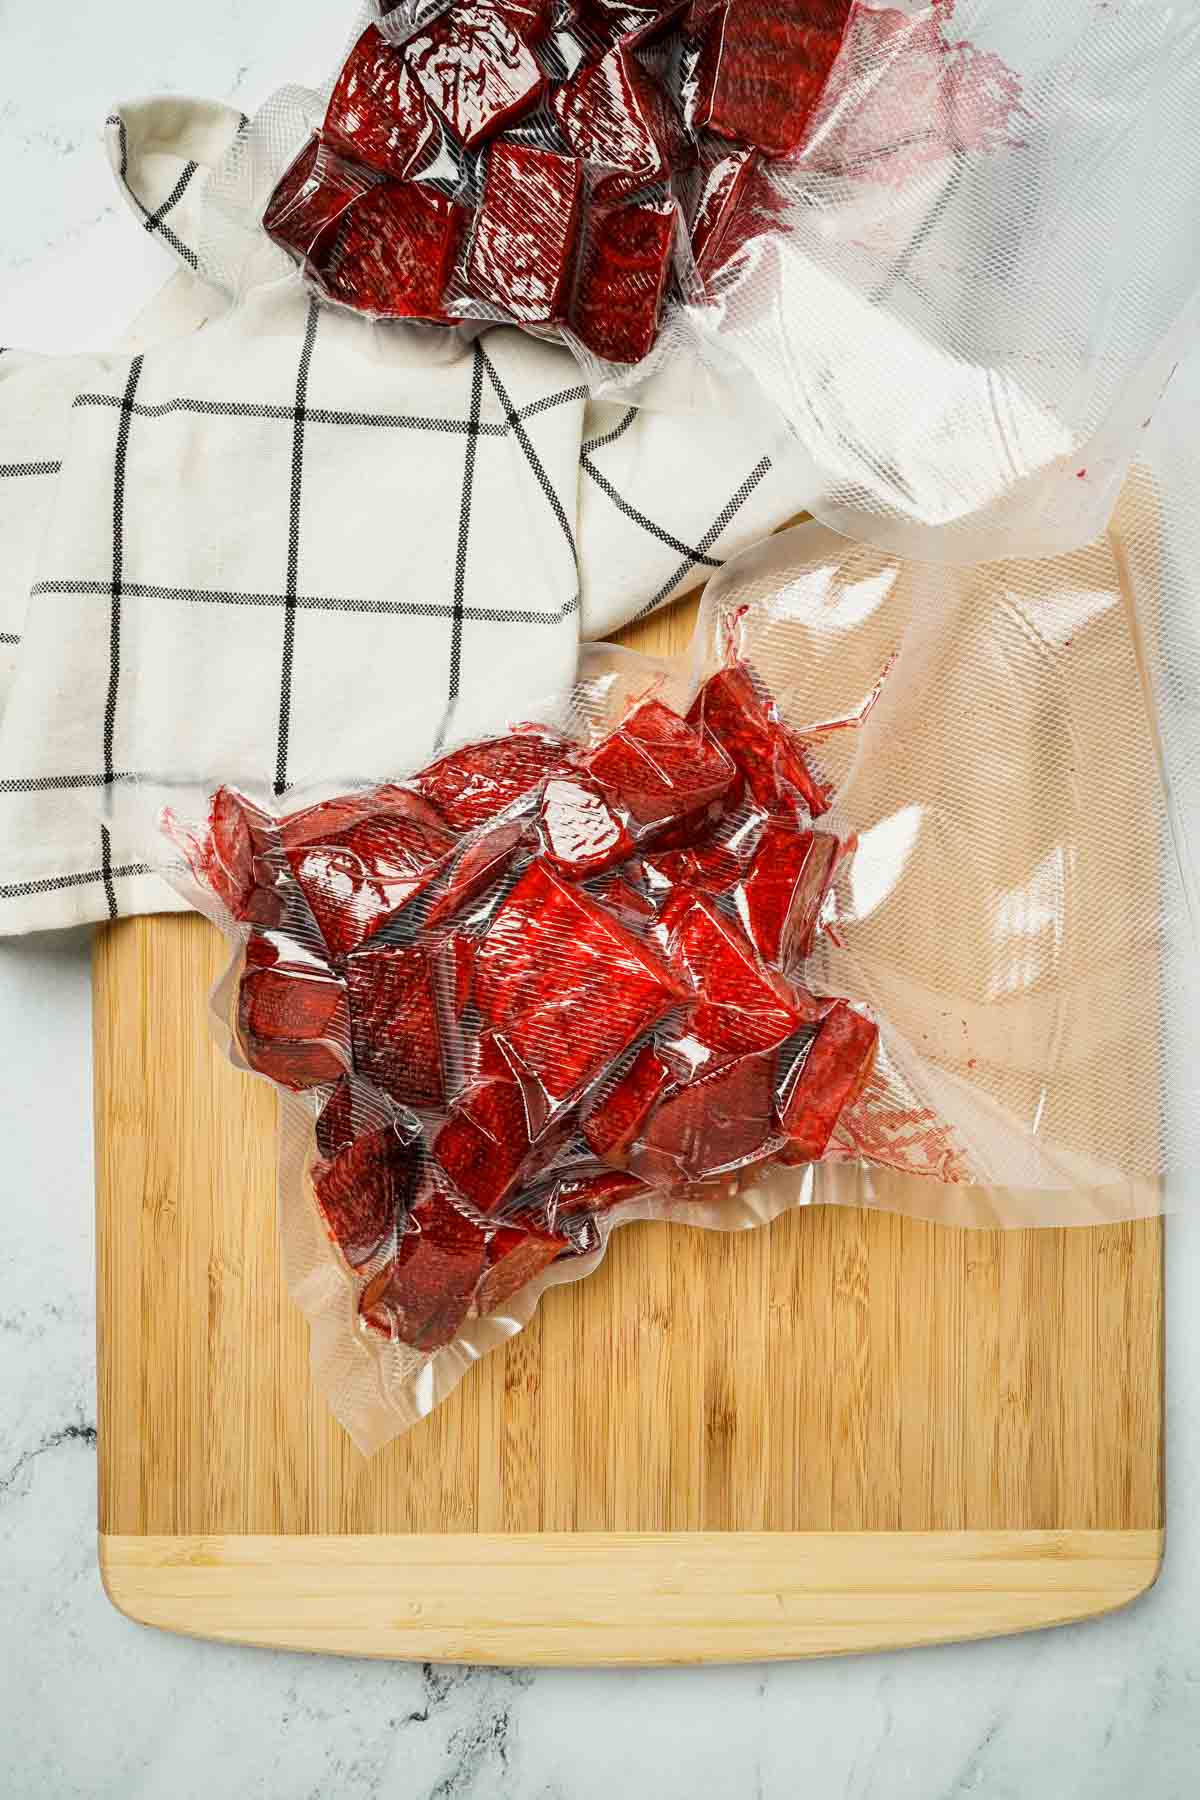 a vacuum seal bag of cut up red beets